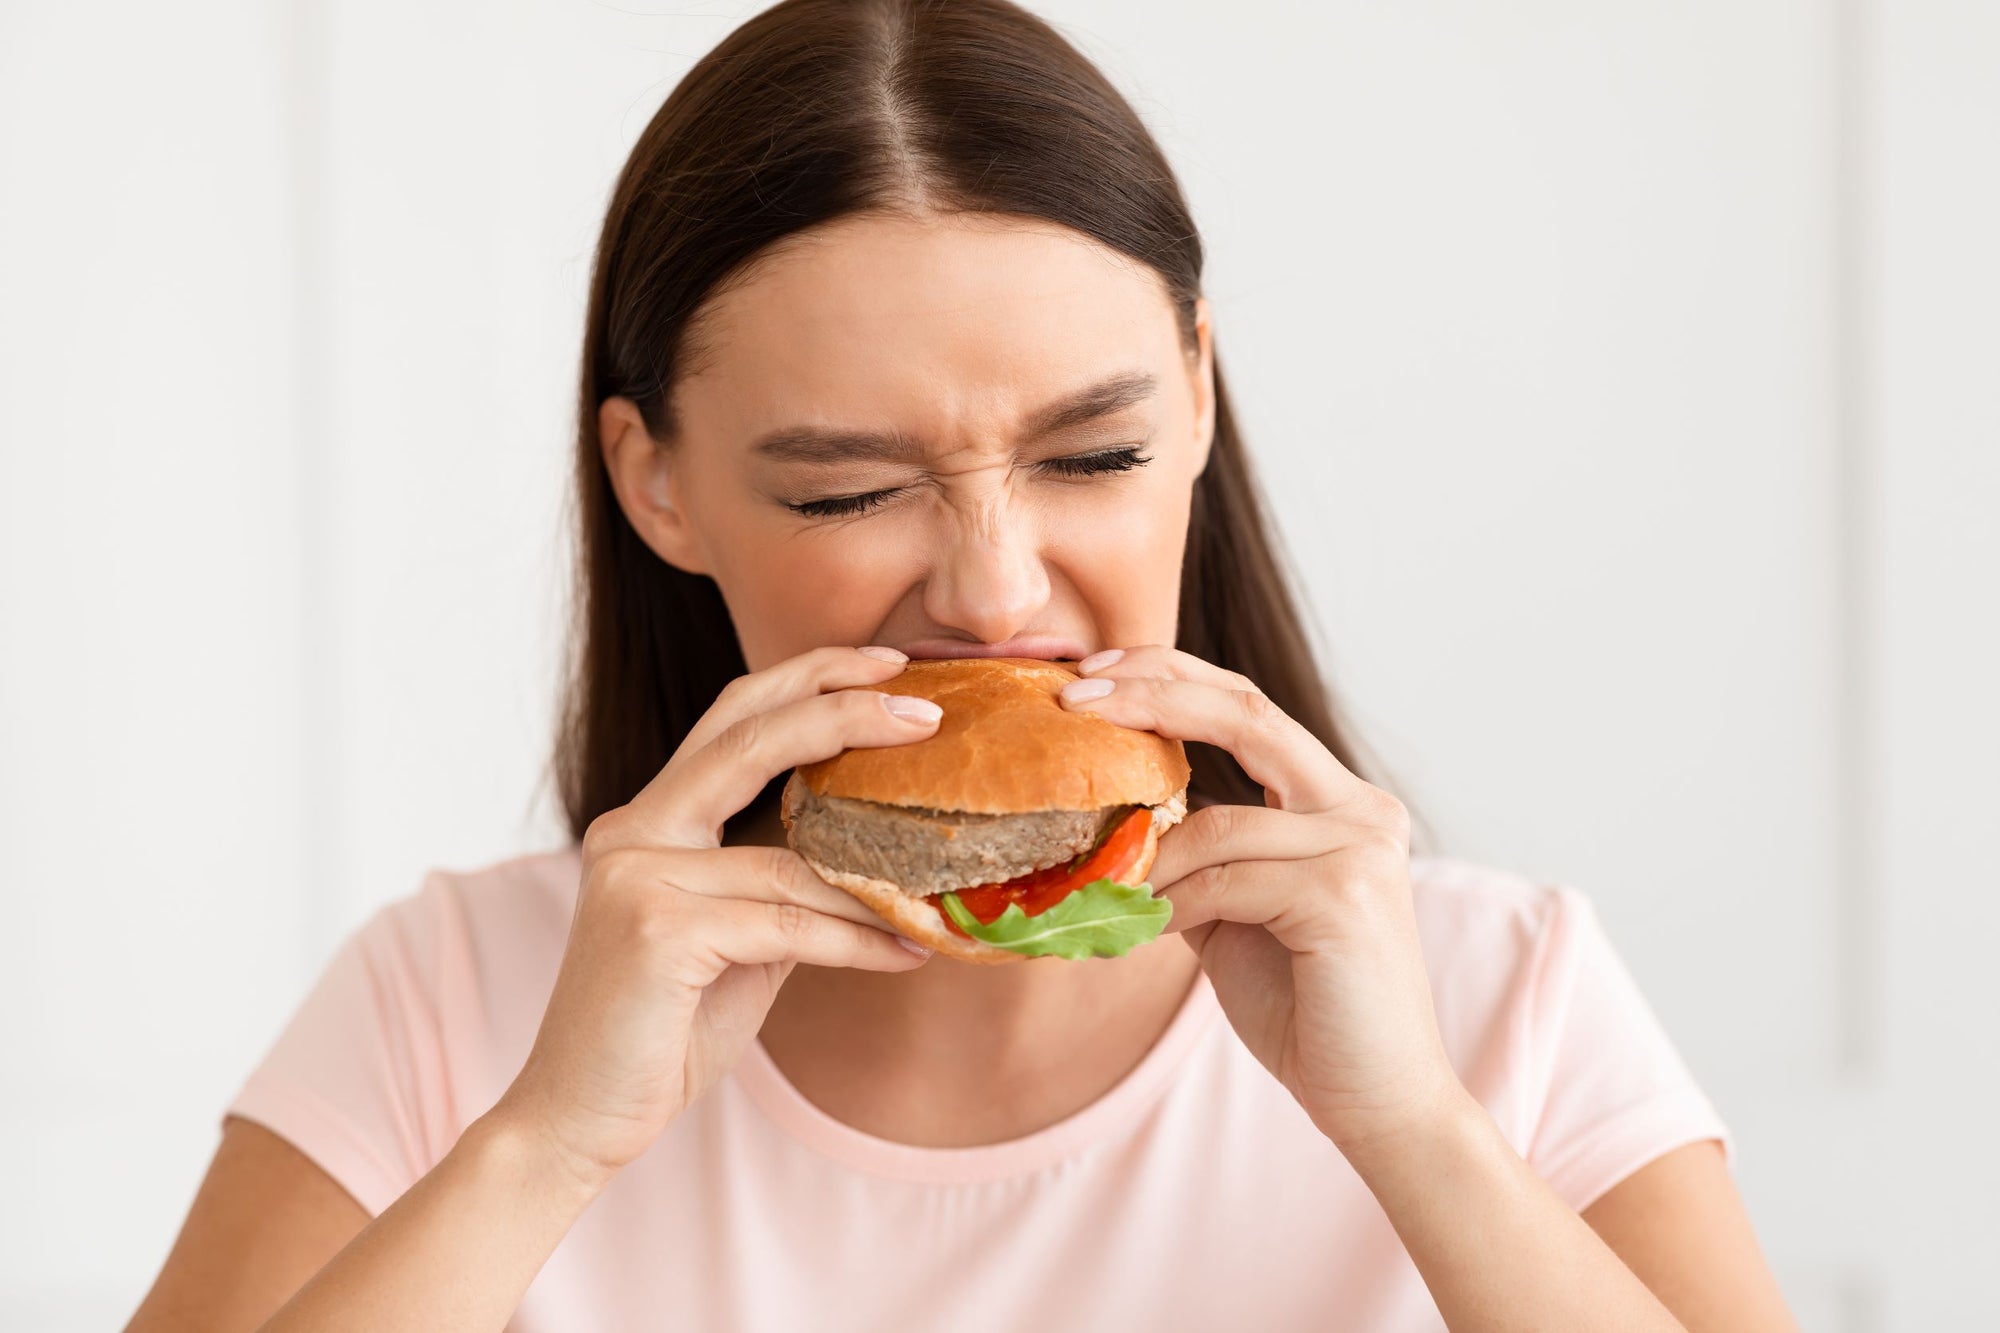 Is Fast Food Disrupting Your Hormones?